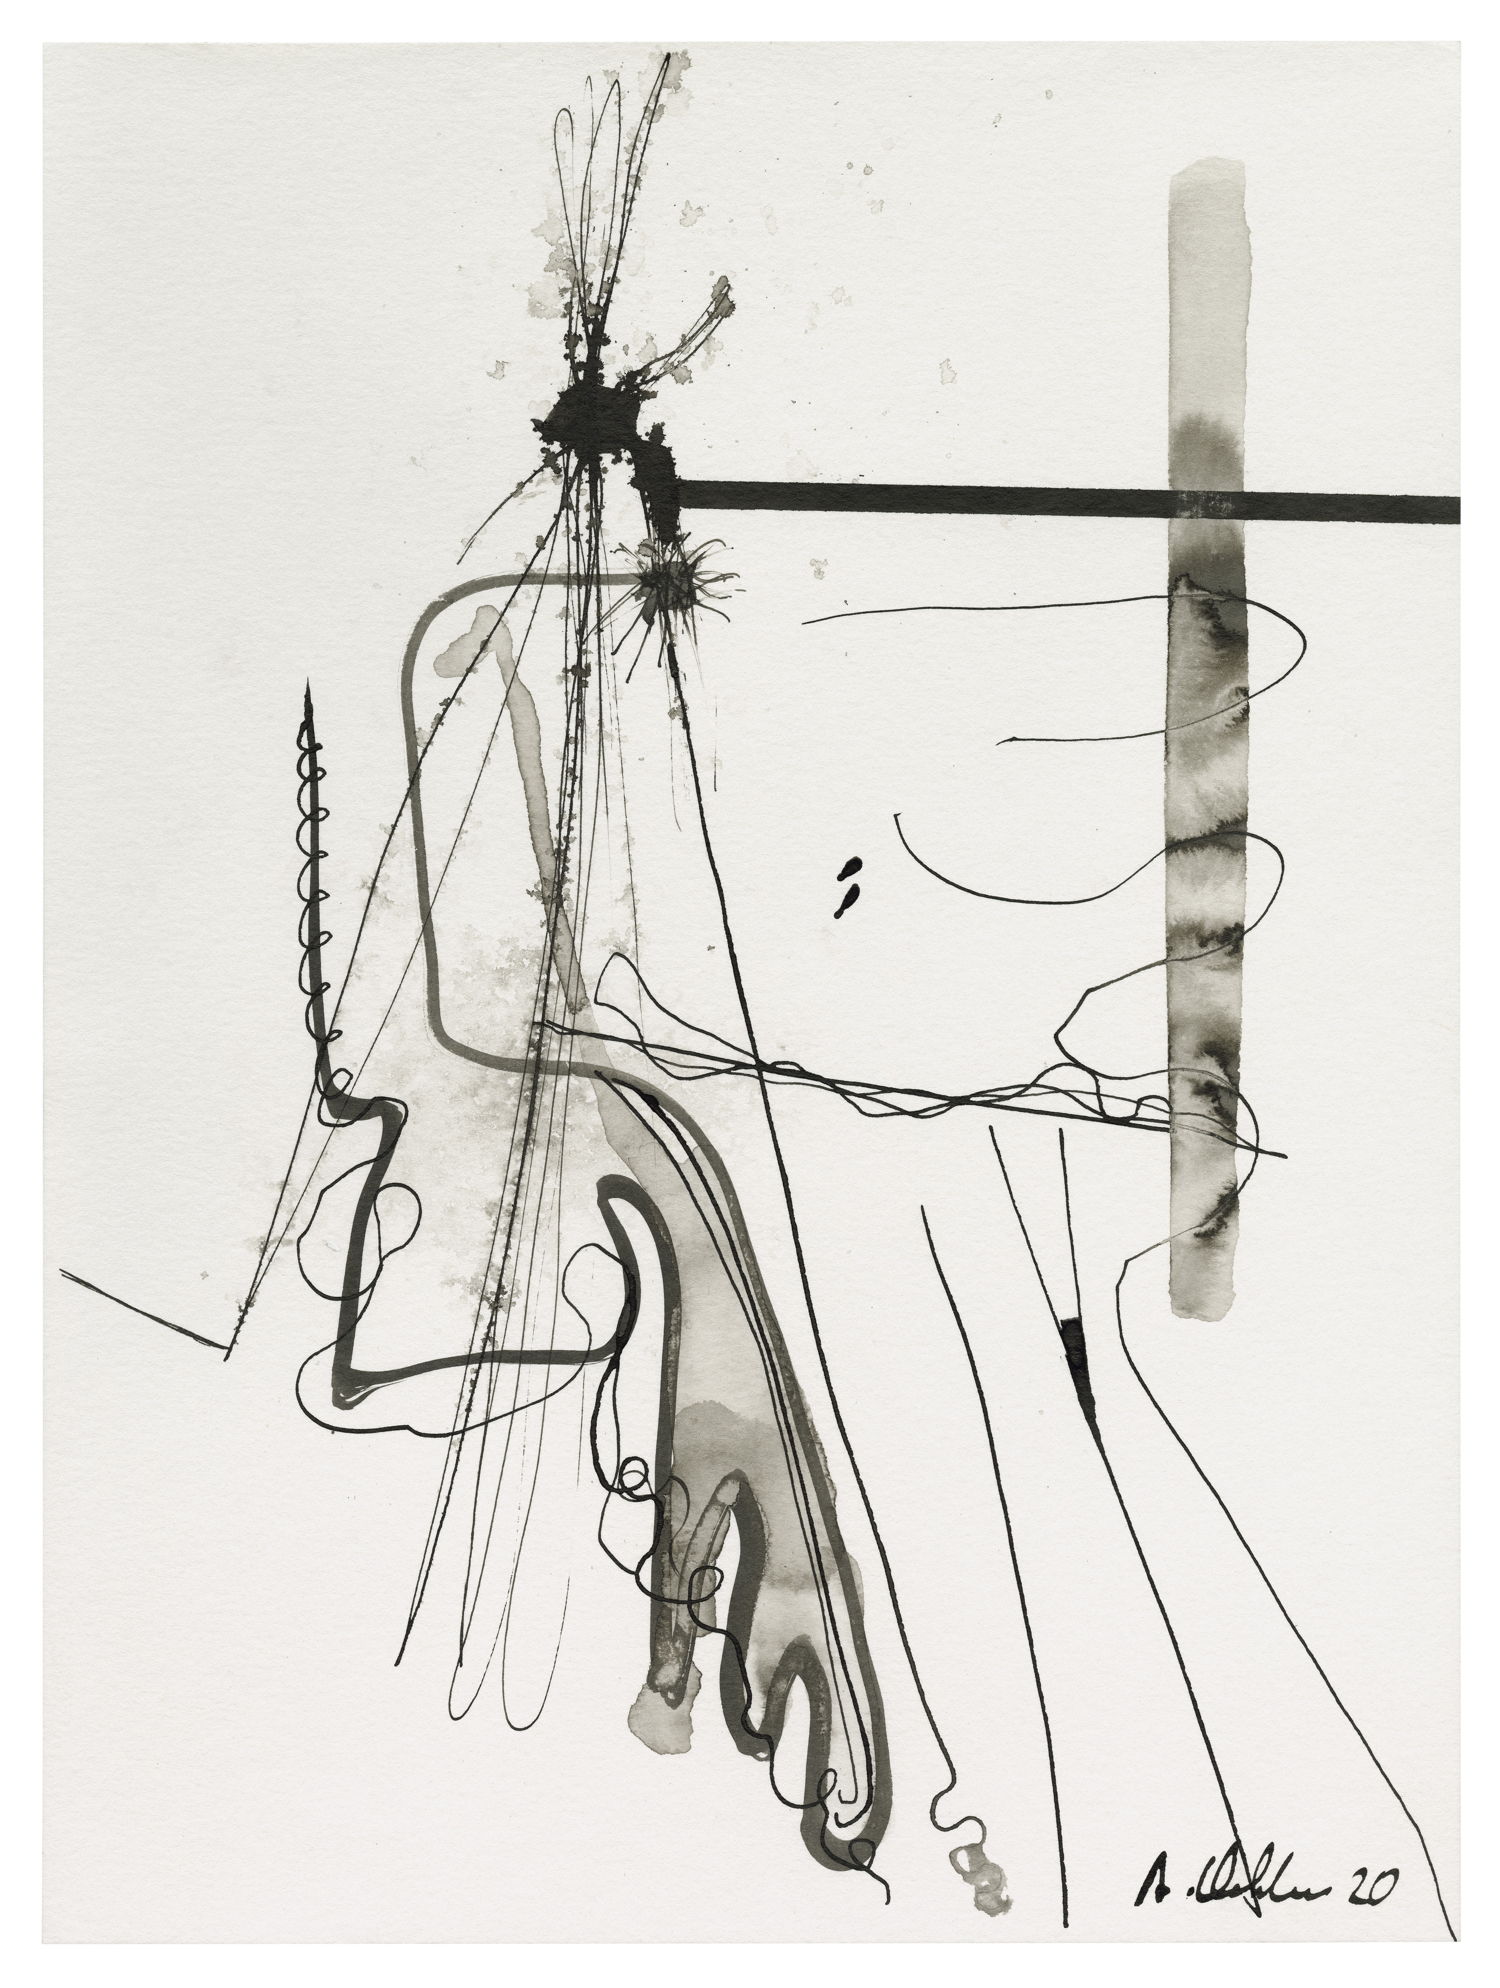 ALBERT OEHLEN Untitled, 2020 ink on handmade paper 30,5 x 22,8 cm. Courtesy Tim Van Laere Gallery, Antwerp